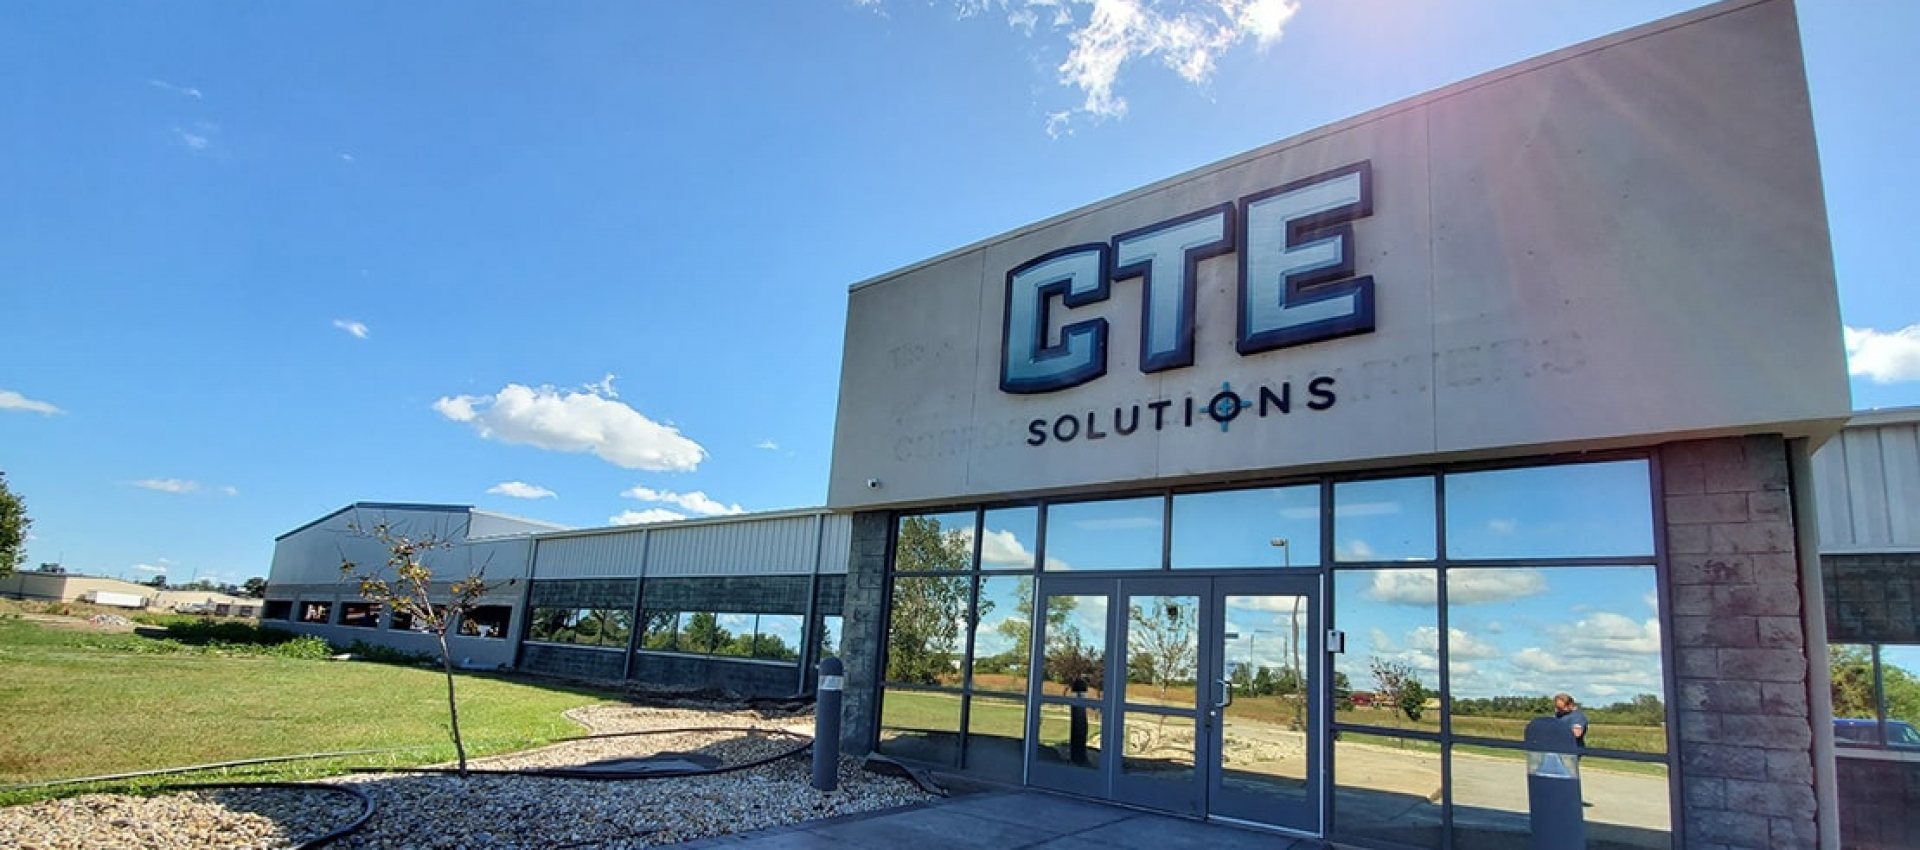 Mediliant SA. Acquisition of CTE Solutions, LLC